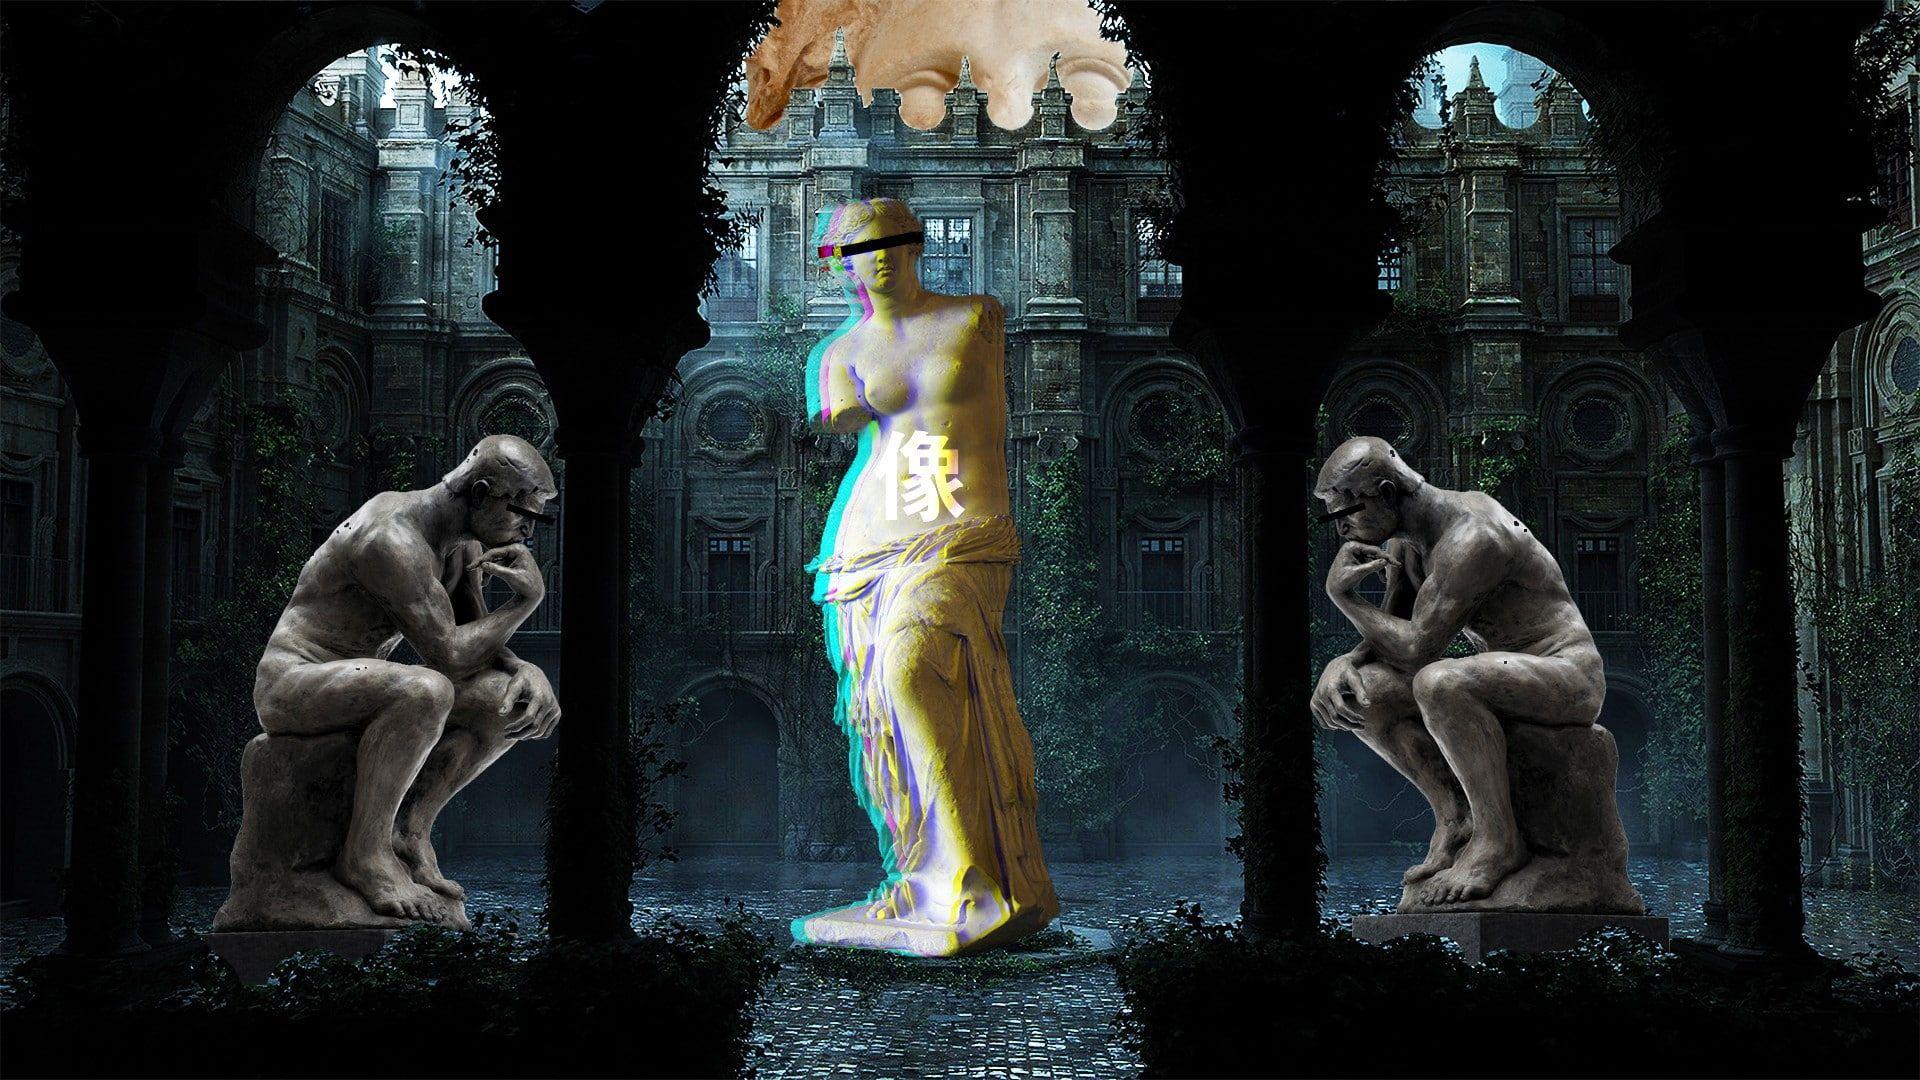 4620 Hercules Statues Images Stock Photos  Vectors  Shutterstock